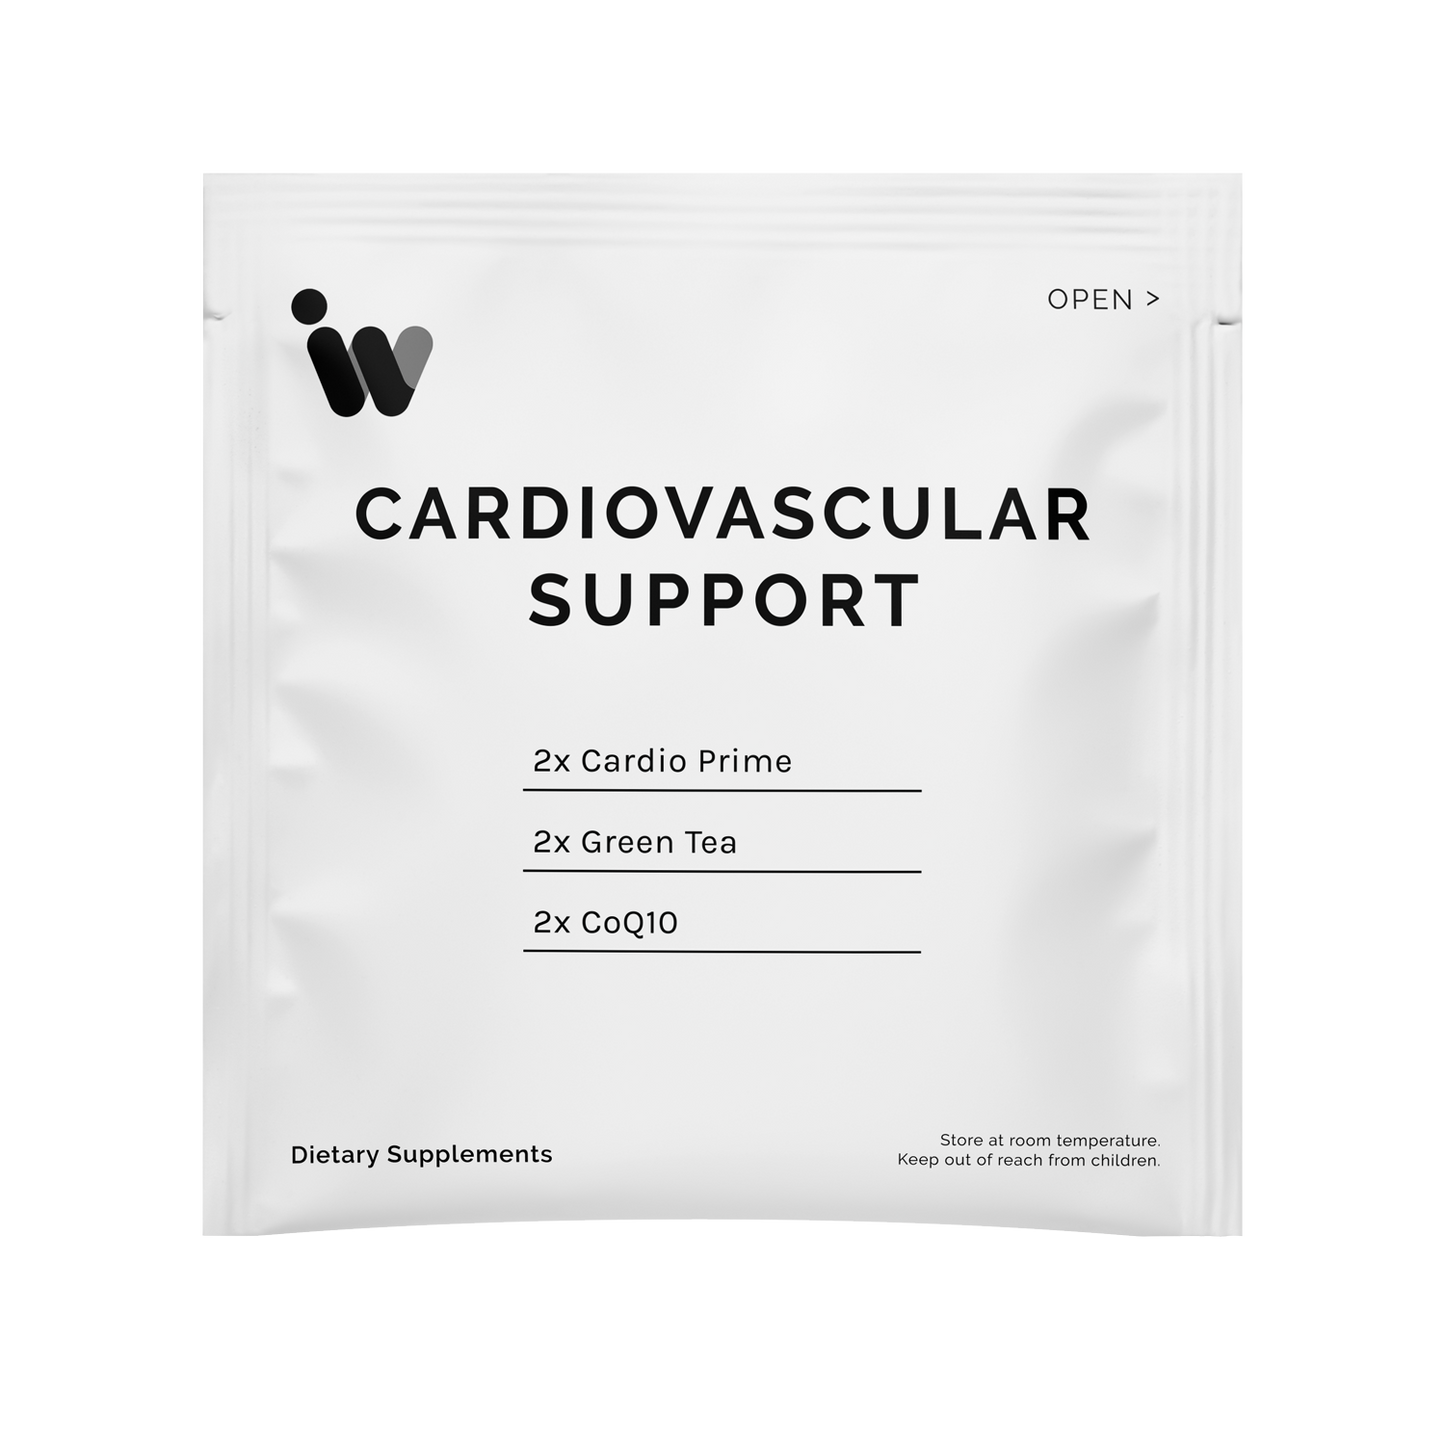 Cardiovascular Support ExactPax™